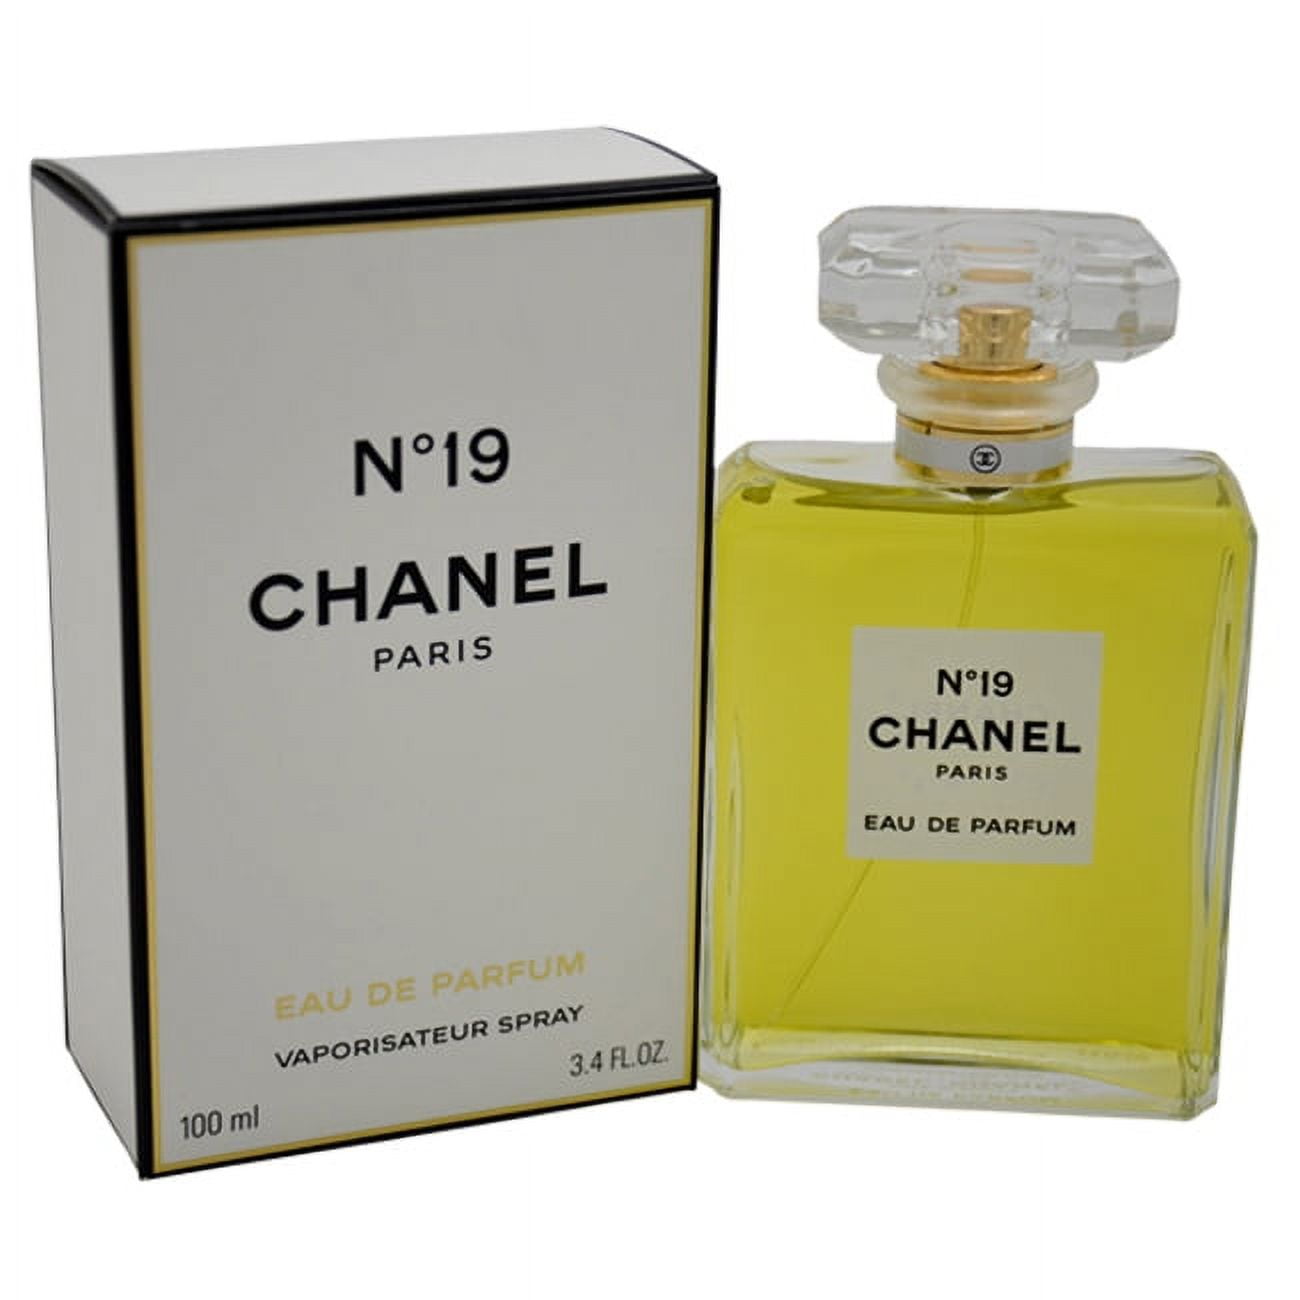 19 chanel perfume for women